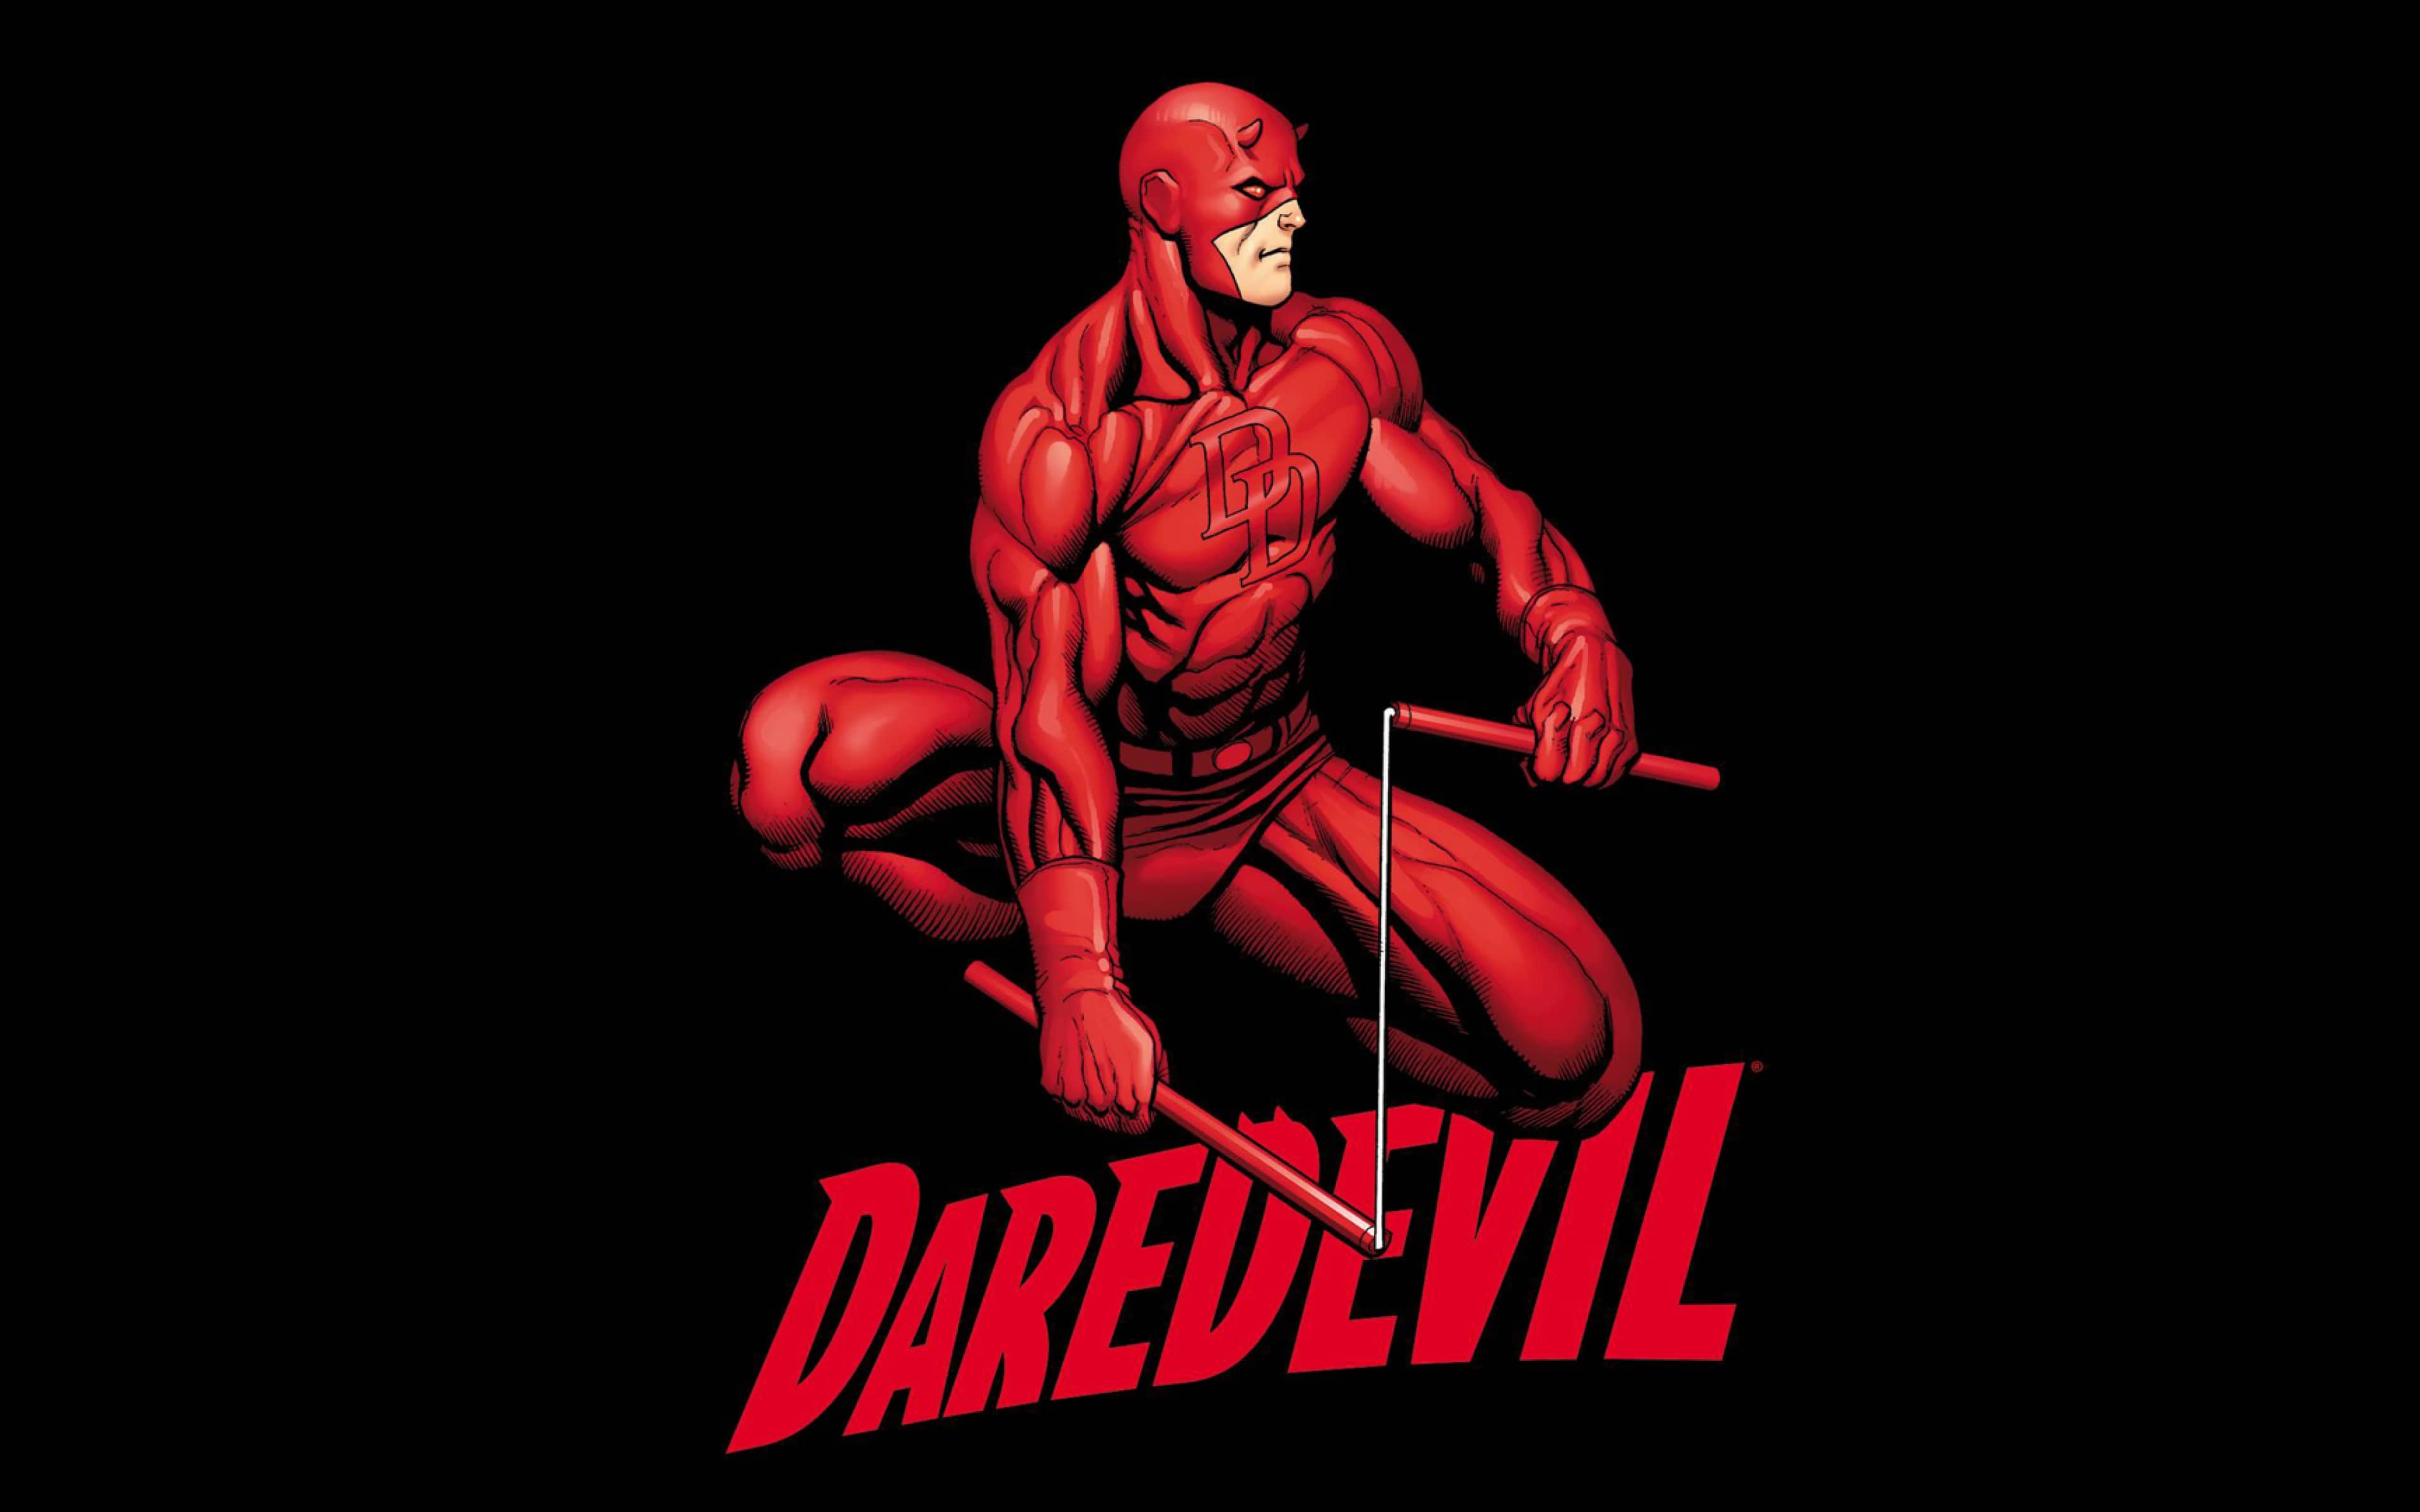 Daredevil Marvel Superhero Ics Wallpaper And Stock